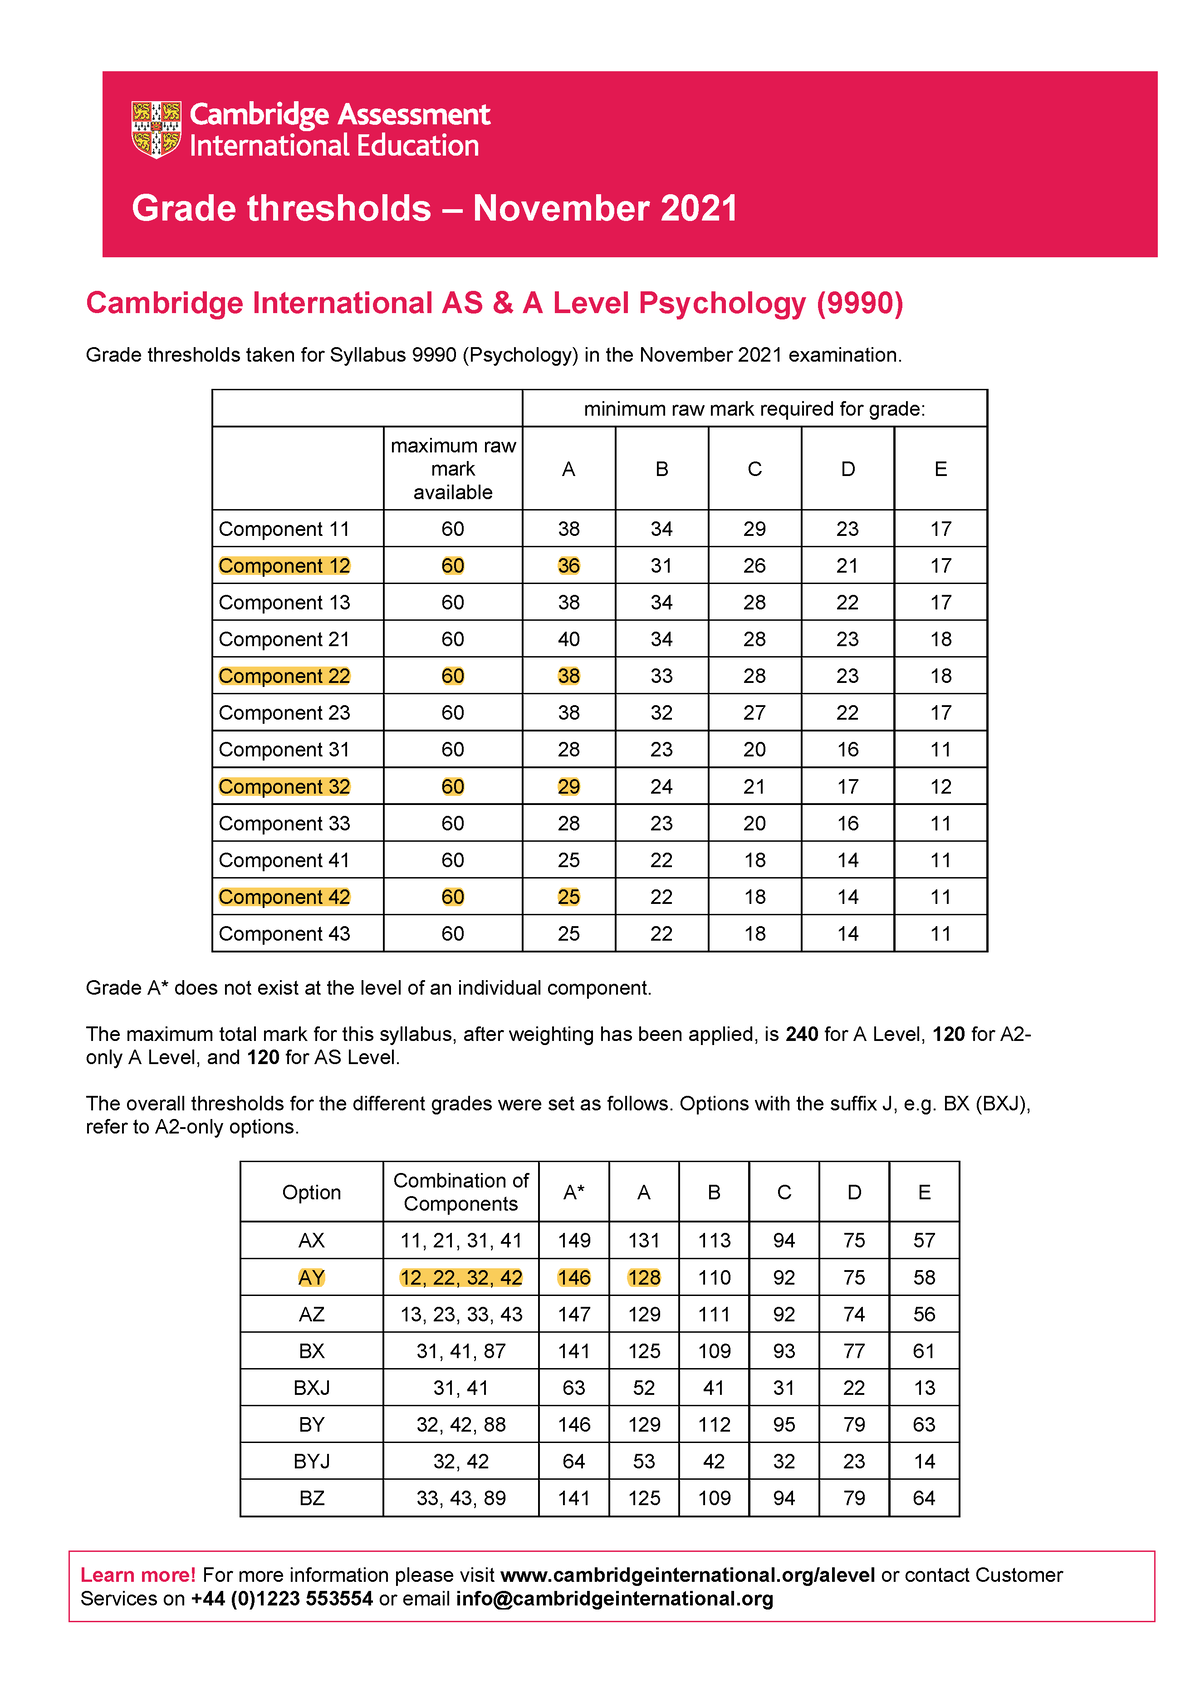 Grade Boundaries for A Level Psychology, Psychology